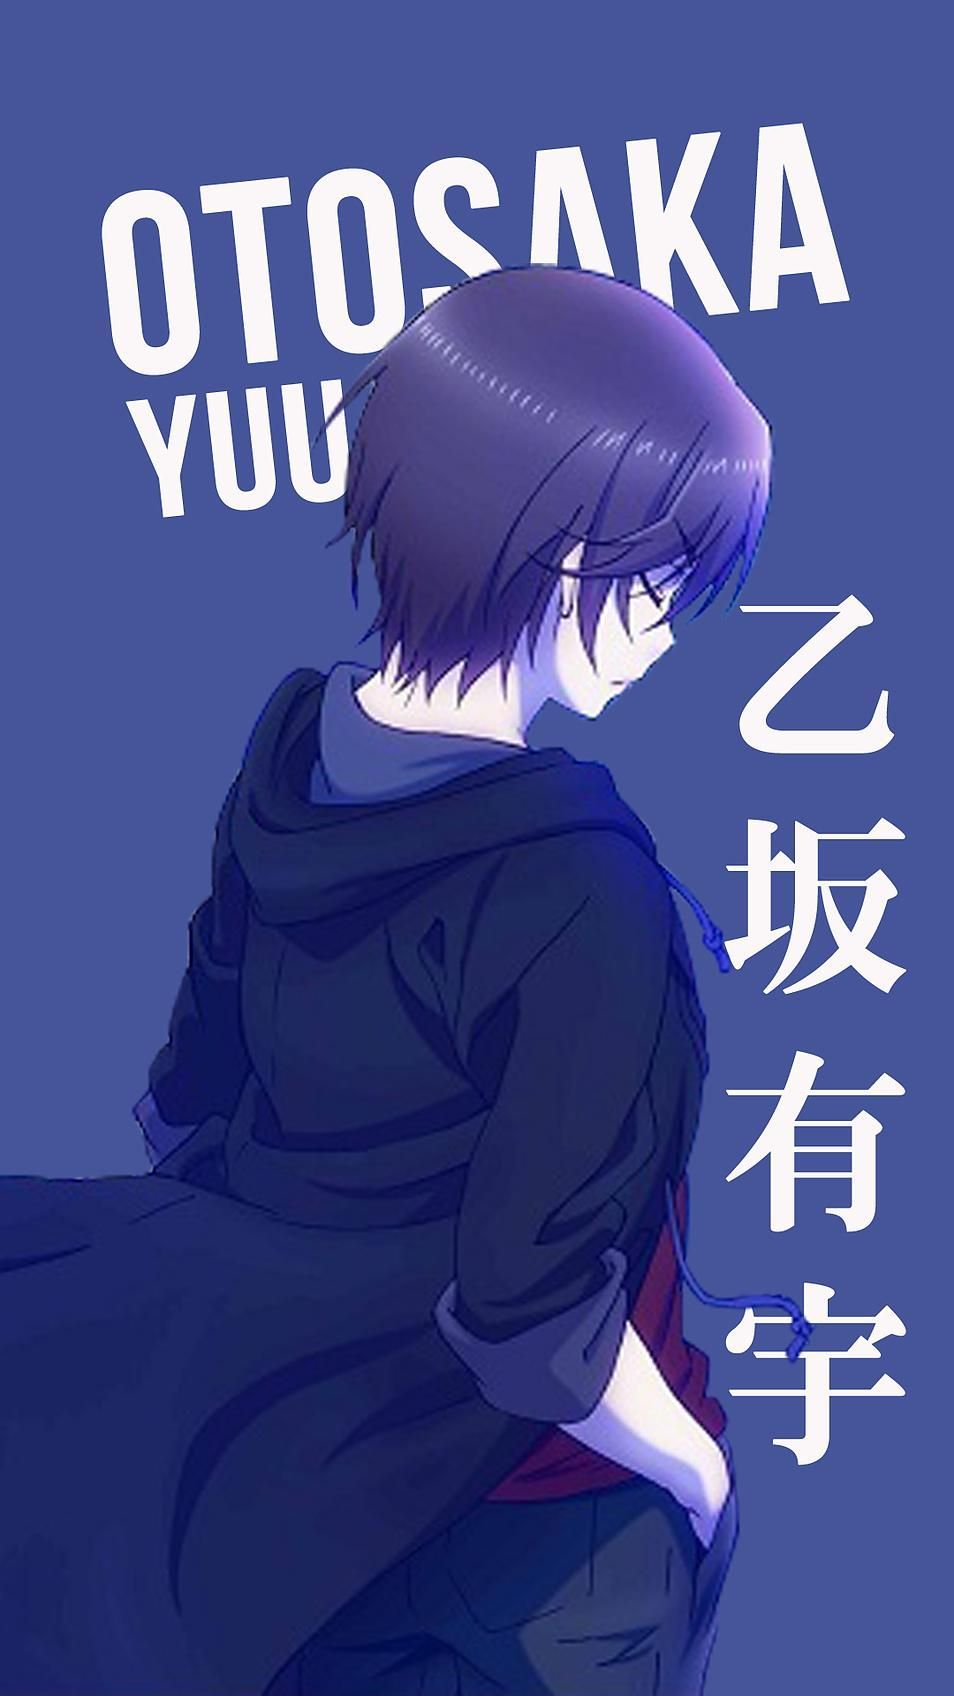 Yuu Otosaka. Personajes de anime, Anime masculino, Dibujos anime